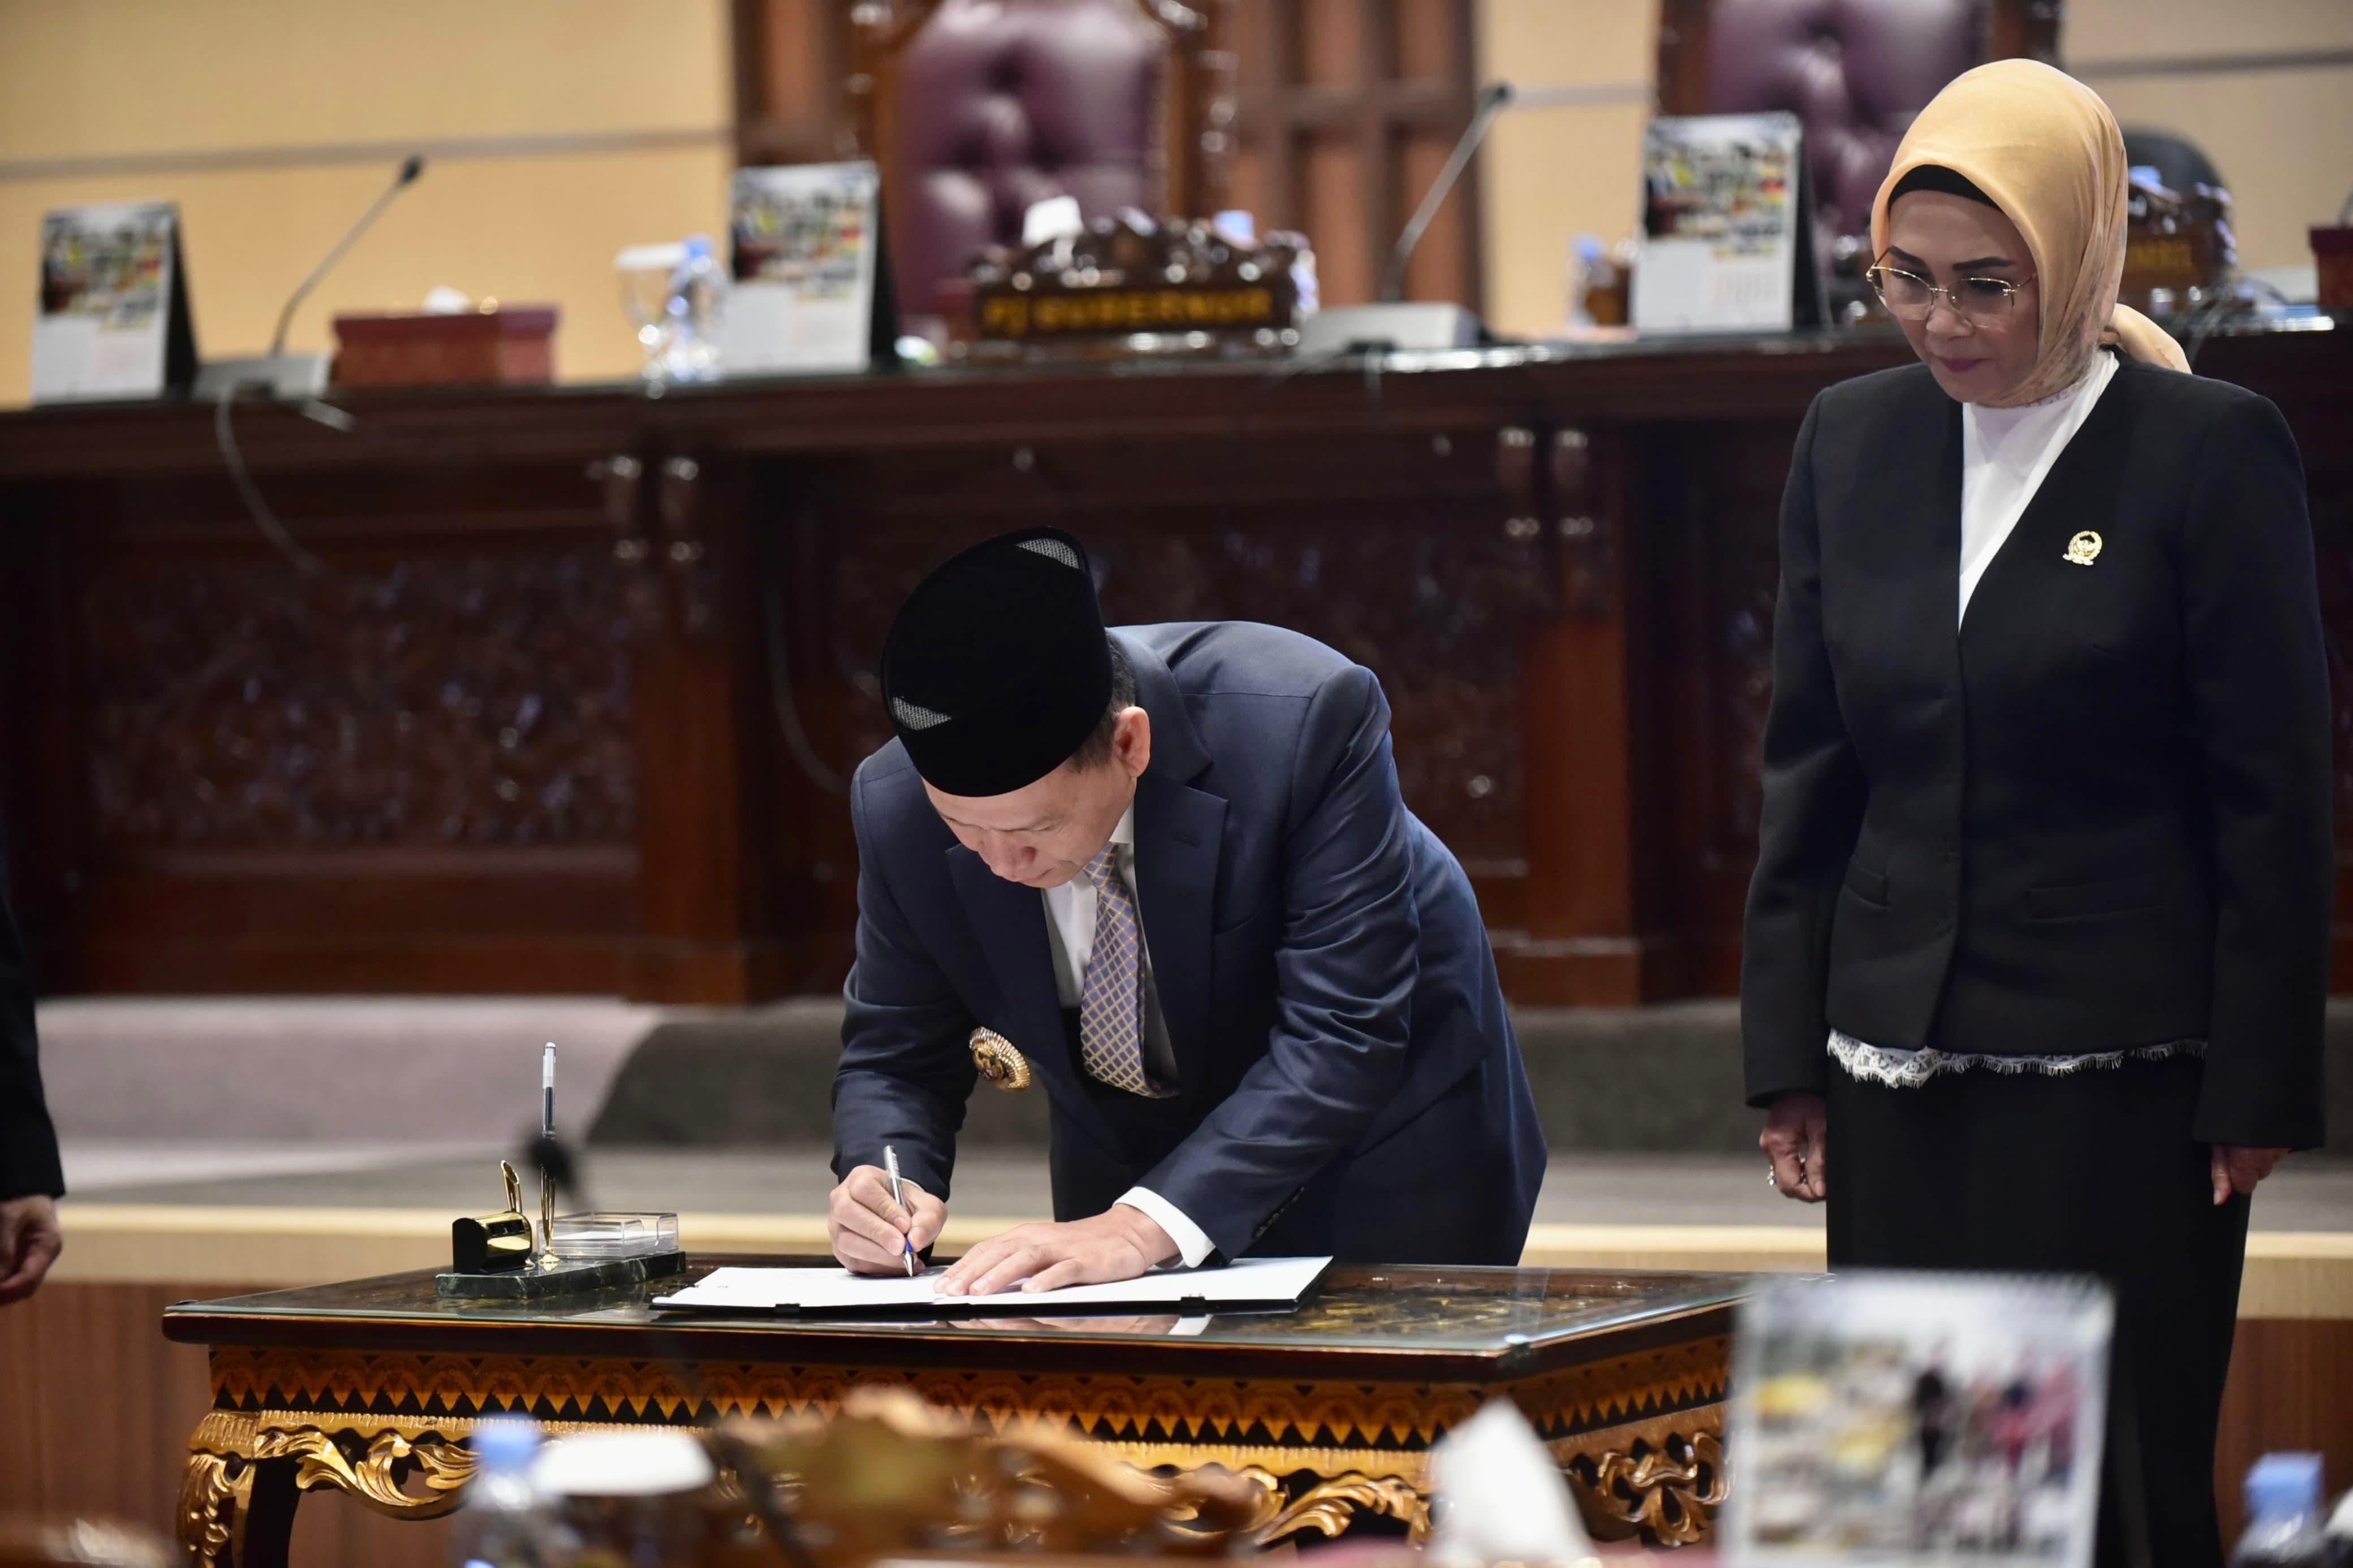 SAH! PJ Gubernur Sumsel dan Ketua DPRD Teken Perda Pertanggungjawaban APBD 2023